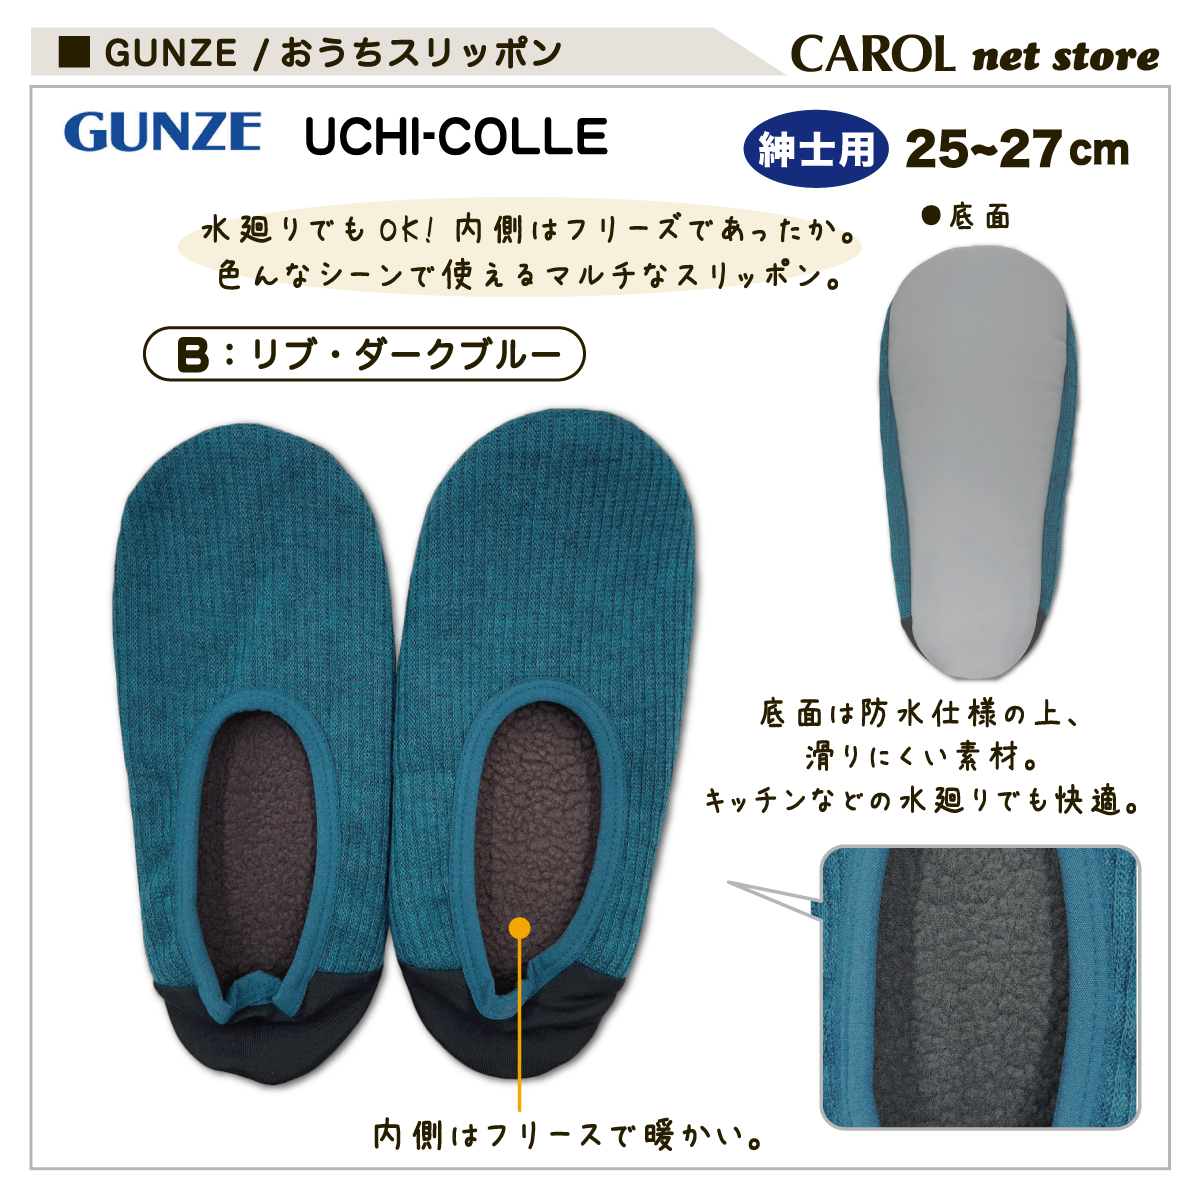  Gunze uchikore... туфли без застежки салон обувь джентльмен для 25-27cm теплый защищающий от холода GUNZE UCHICOLLE стирка OK почтовая доставка 